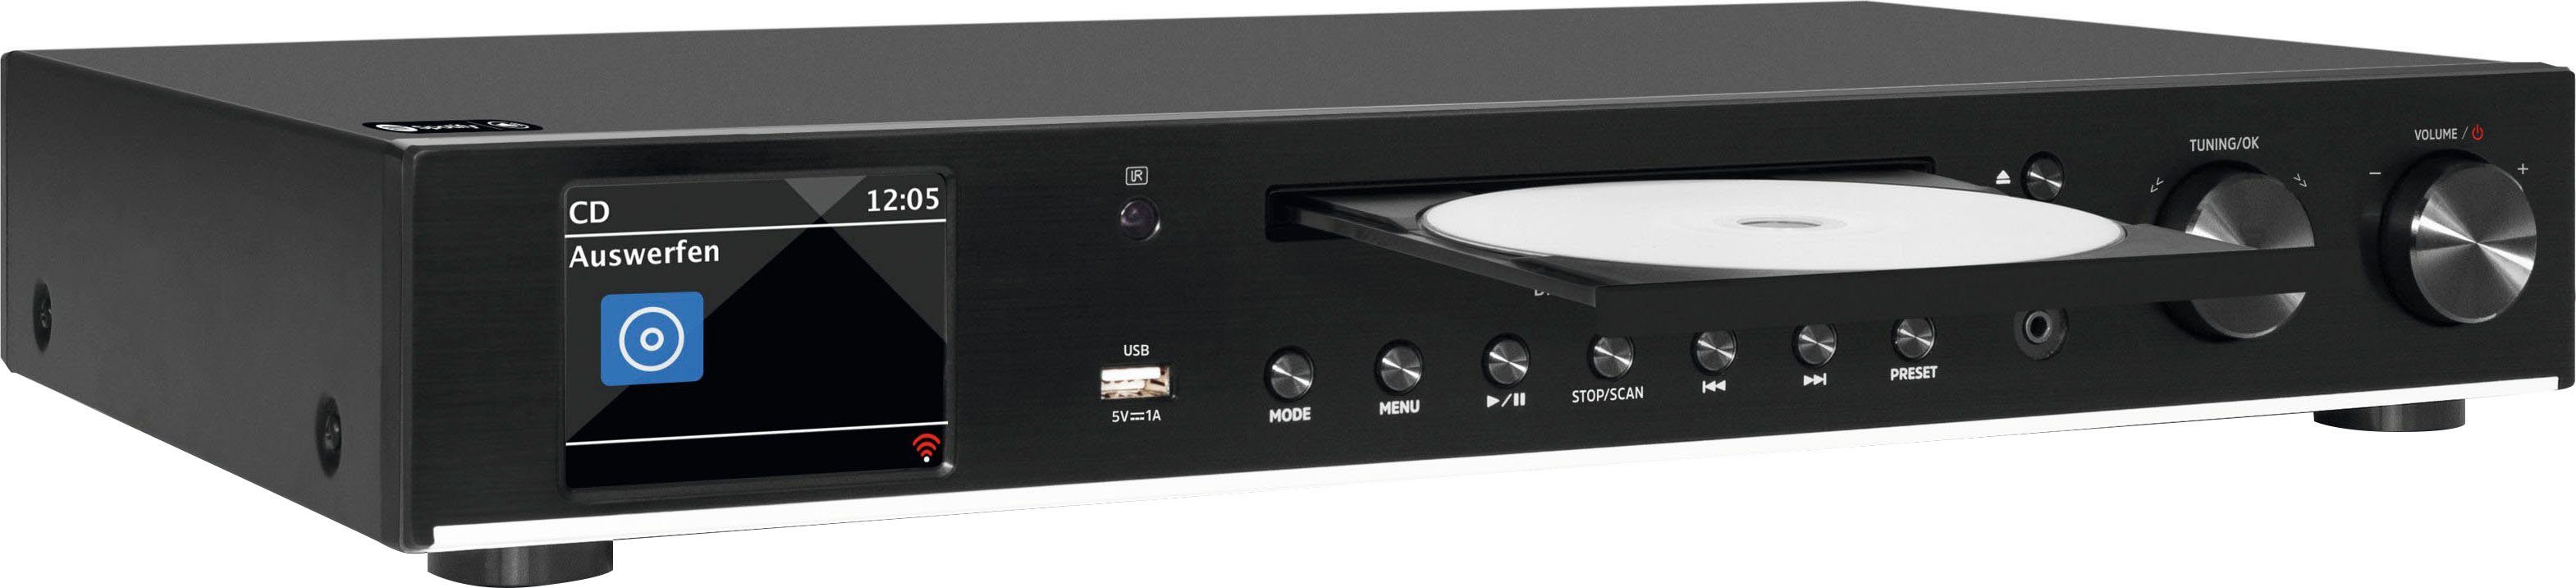 UKW 143 RDS) (V3) mit Internetradio, (Digitalradio schwarz CD Digitalradio (DAB) (DAB), TechniSat DIGITRADIO